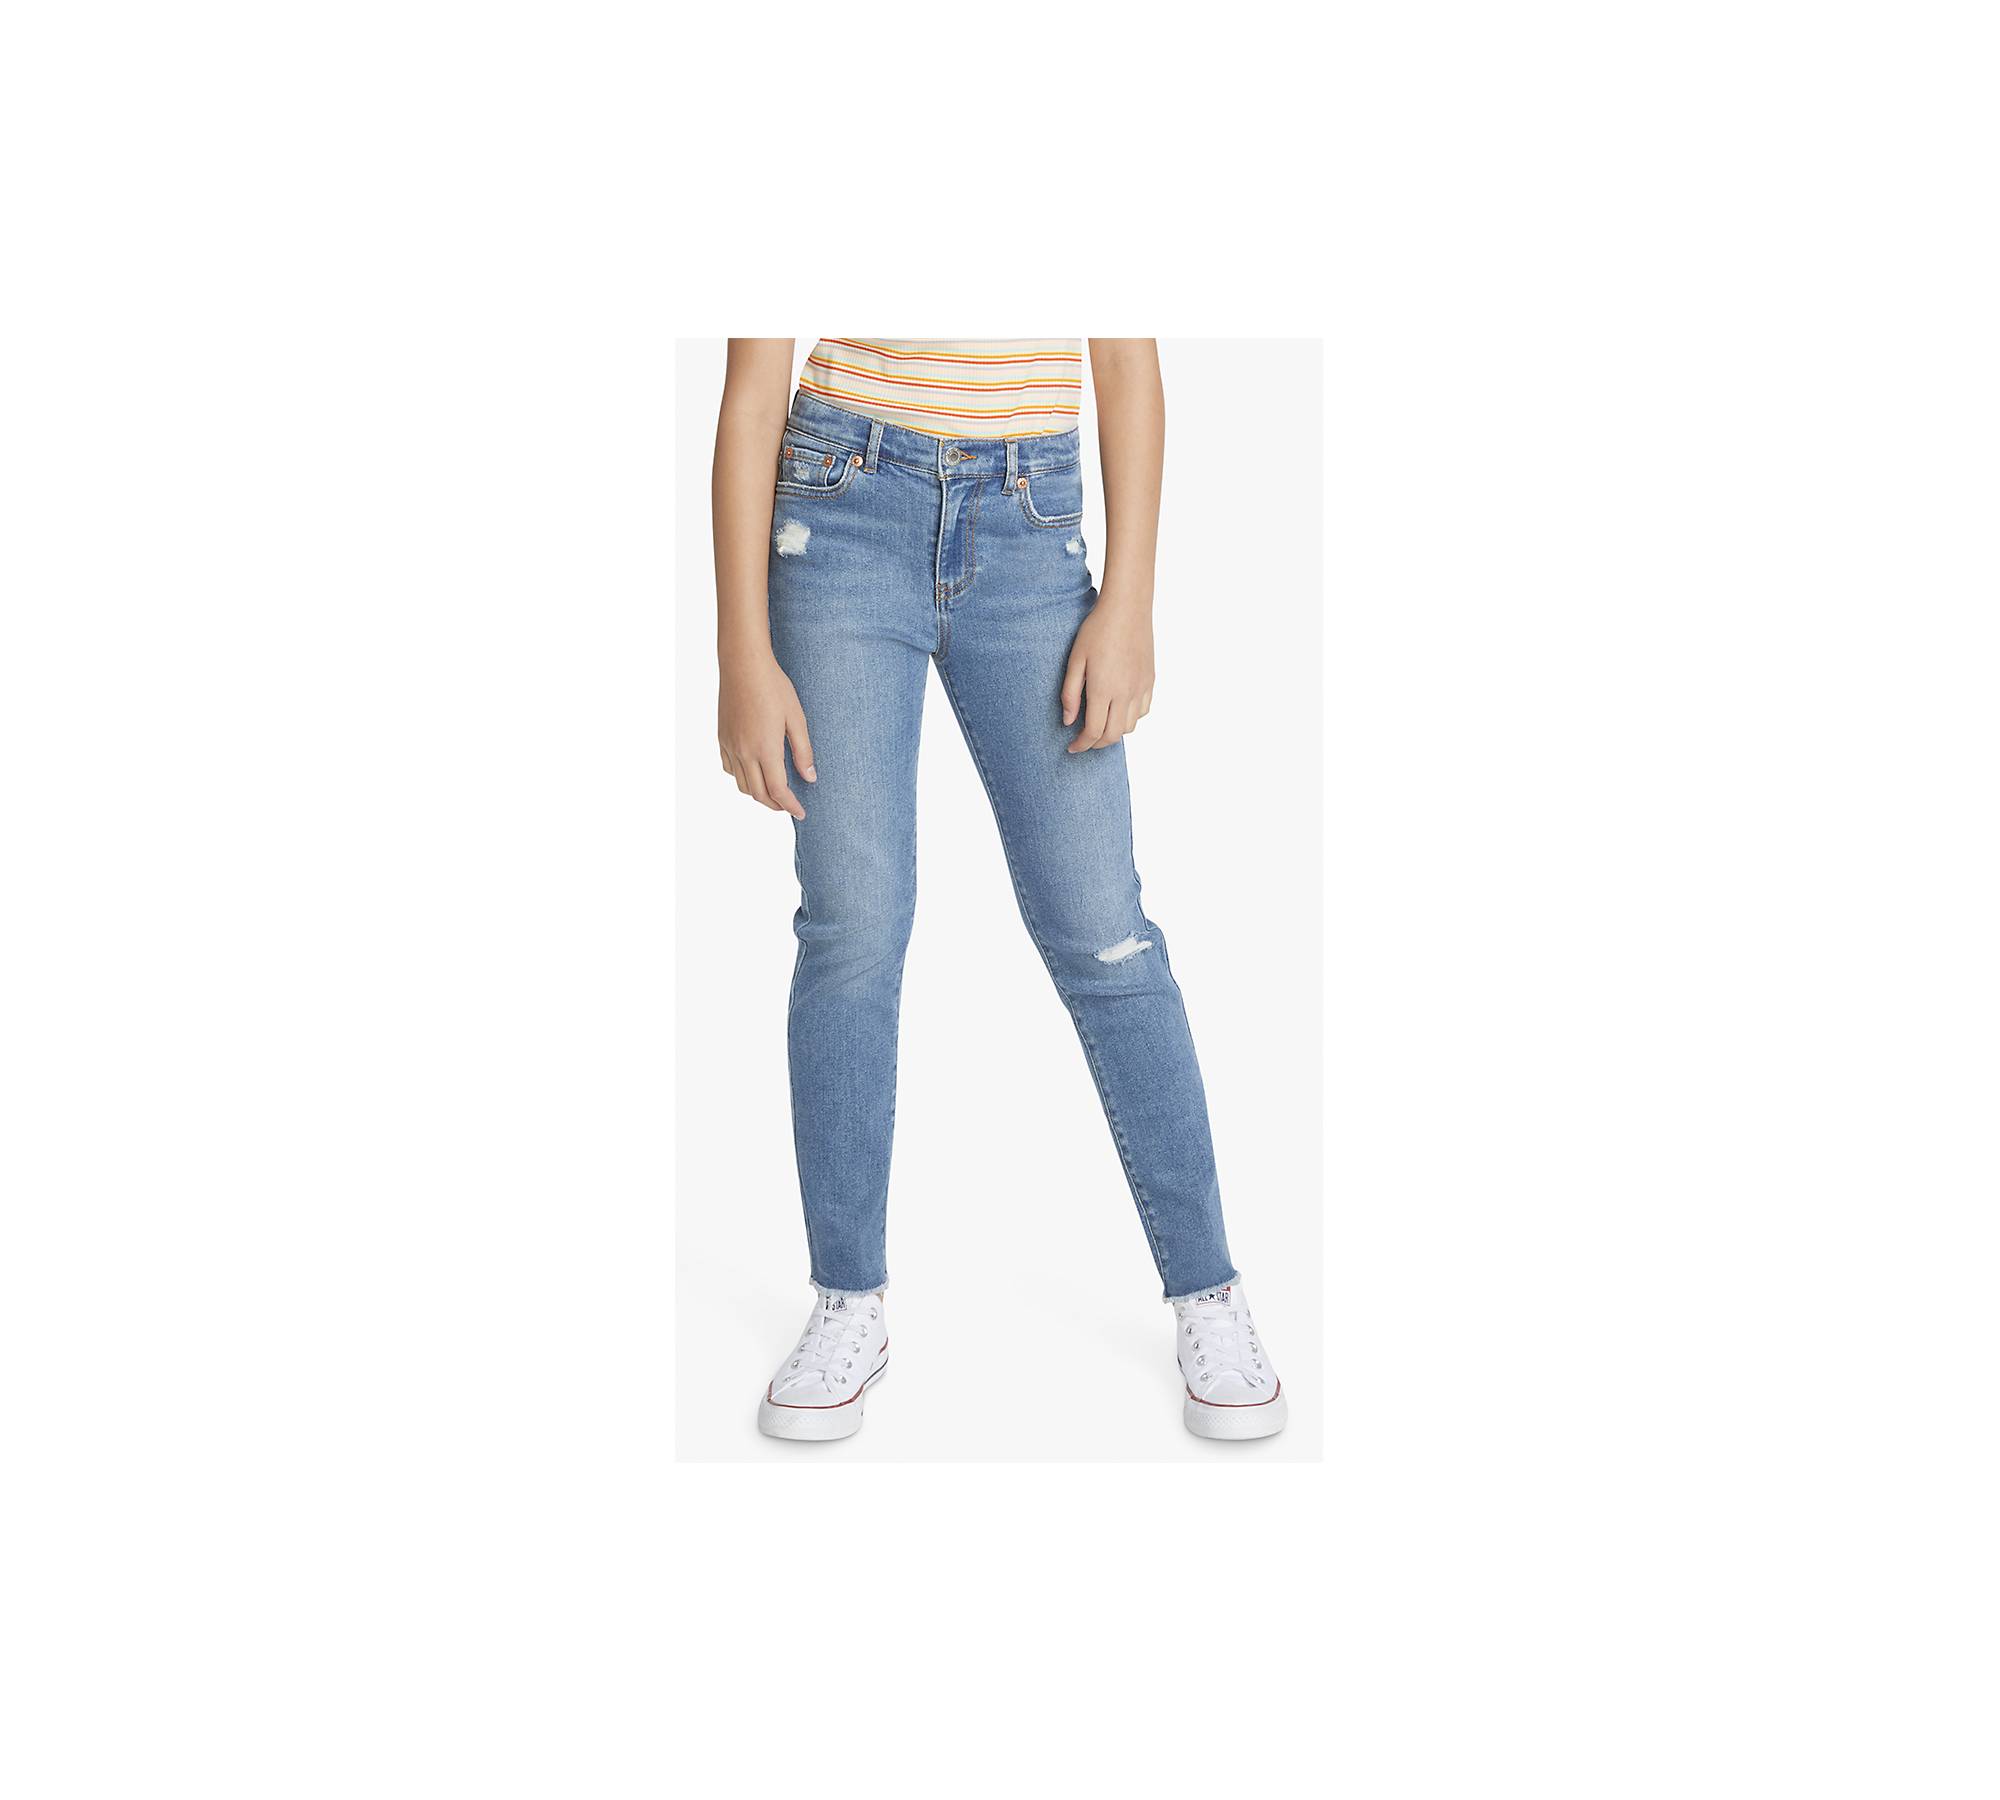 Levi's® Girls' Bootcut Jeans - Dark Blue 6x : Target